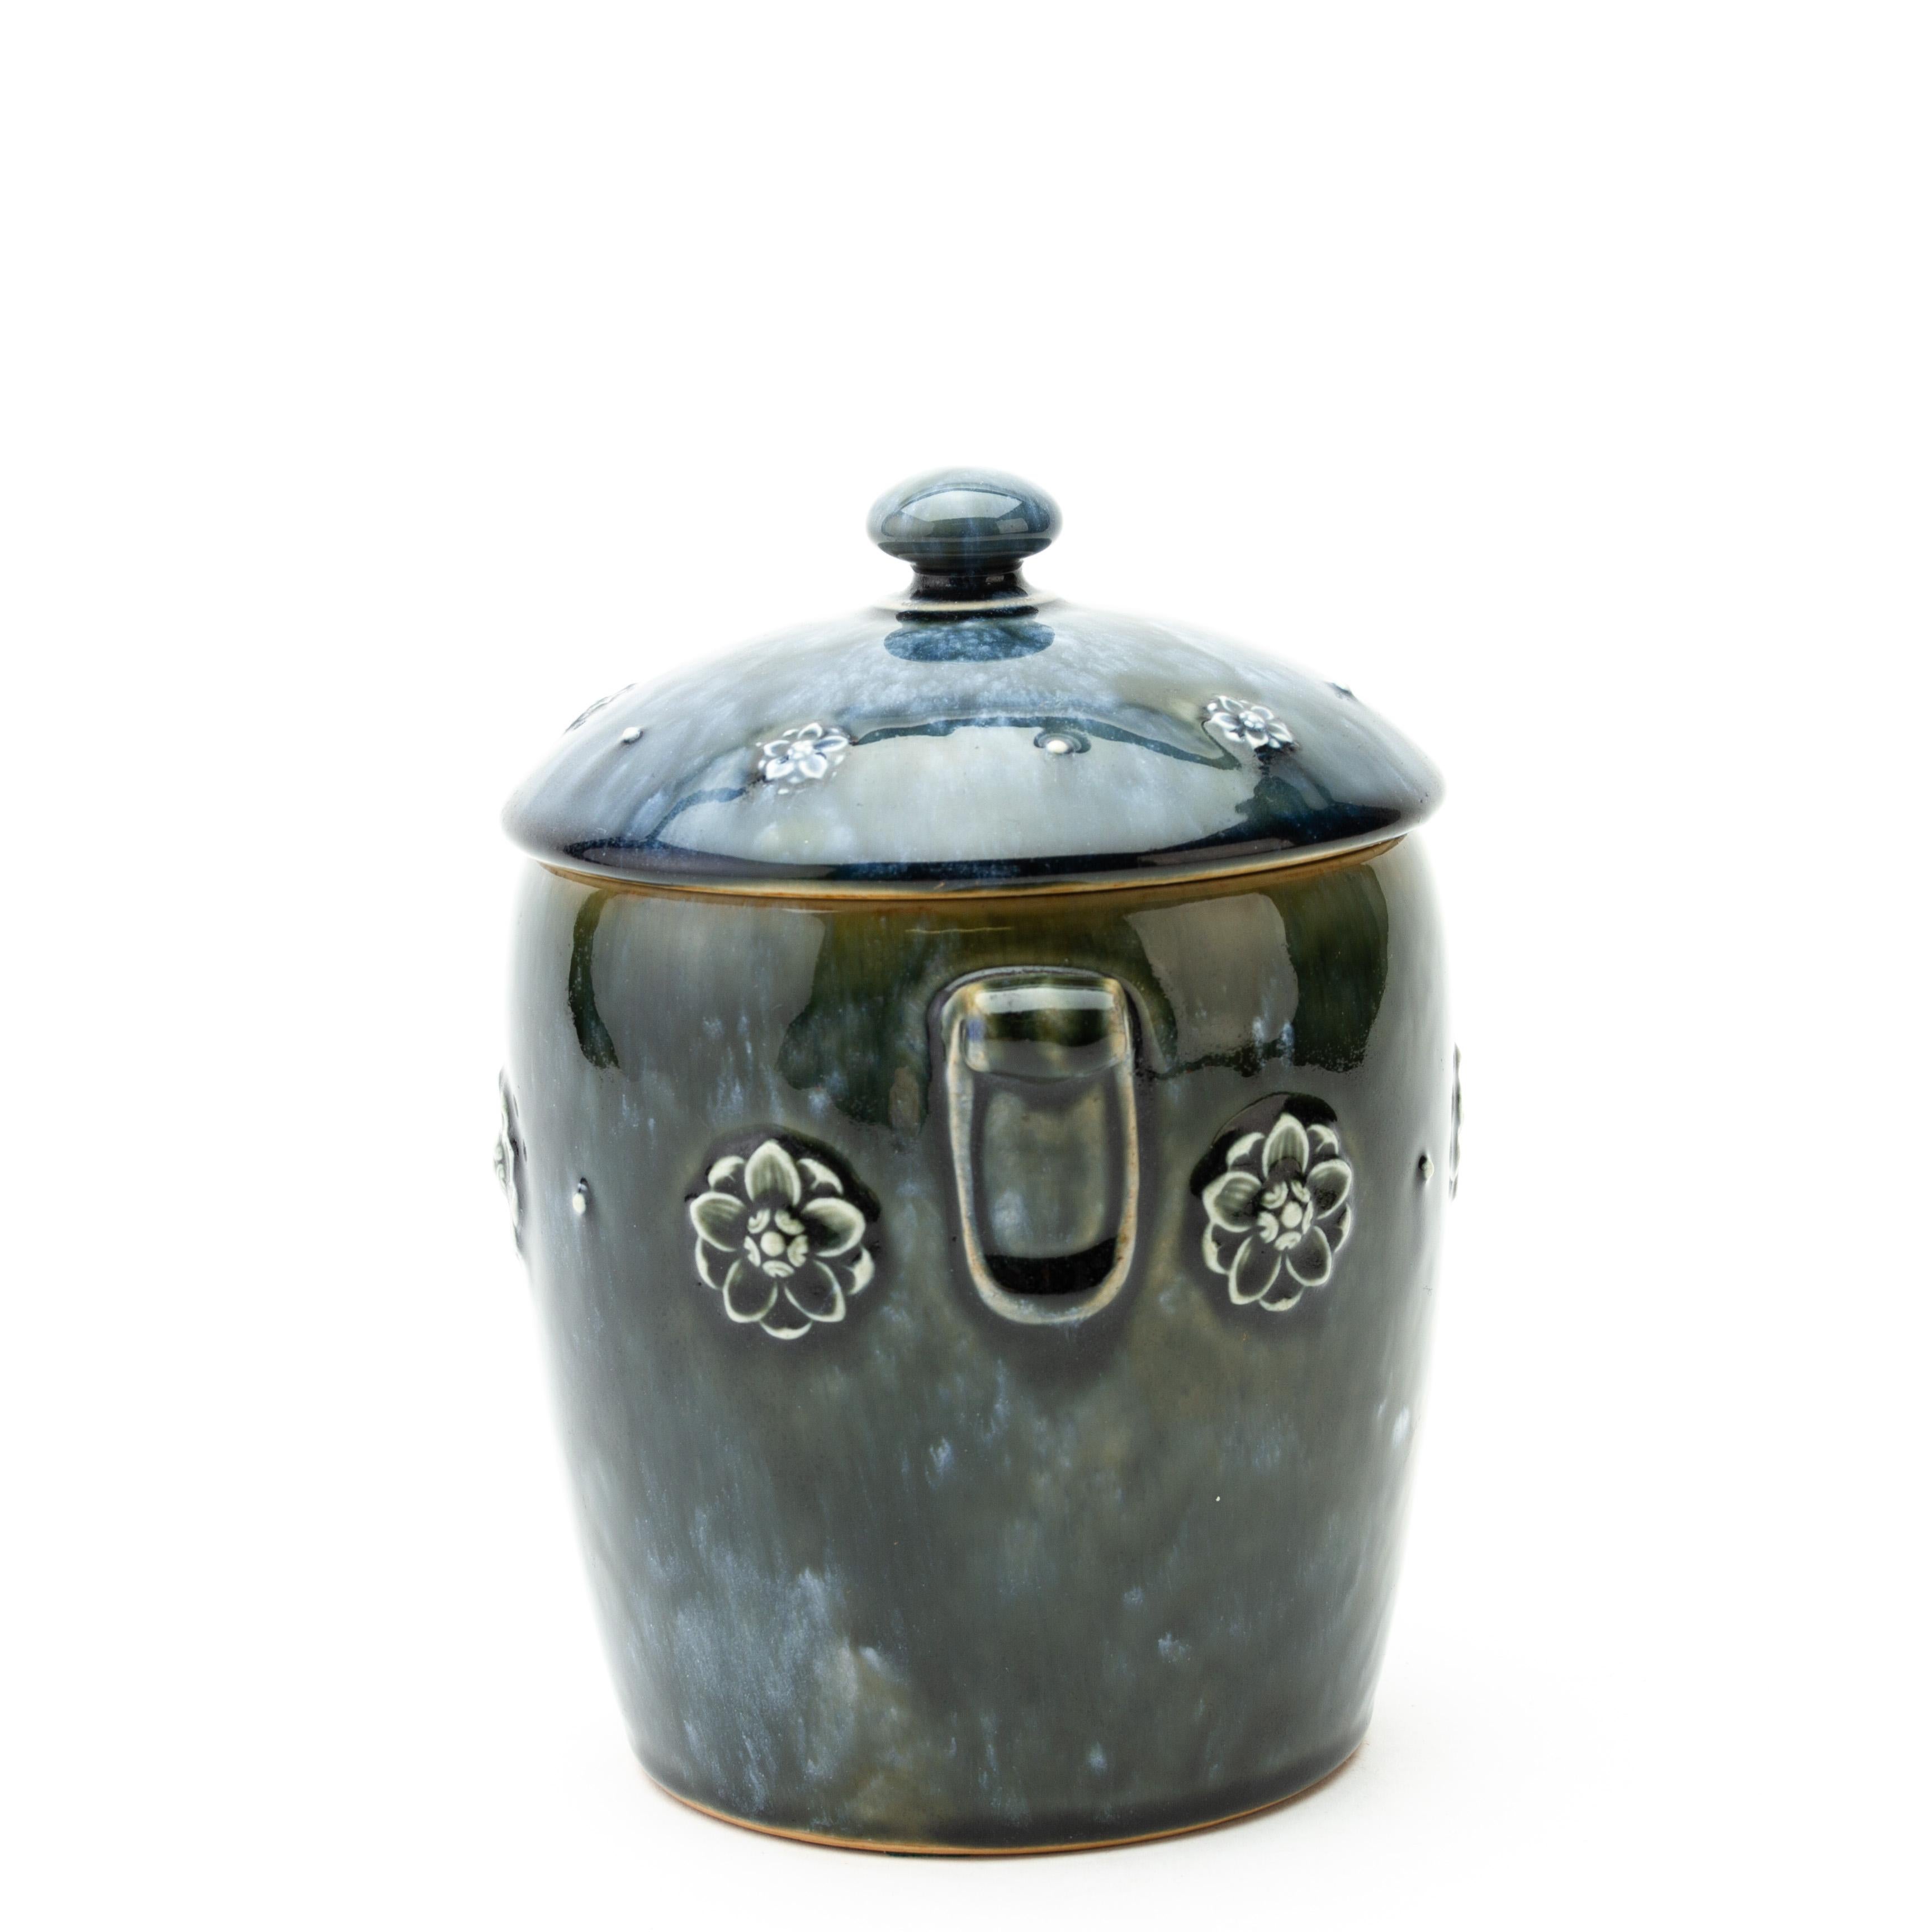 Doulton Lambeth Stoneware Tobacco Jar 19th Century
Good condition
Free international shipping.